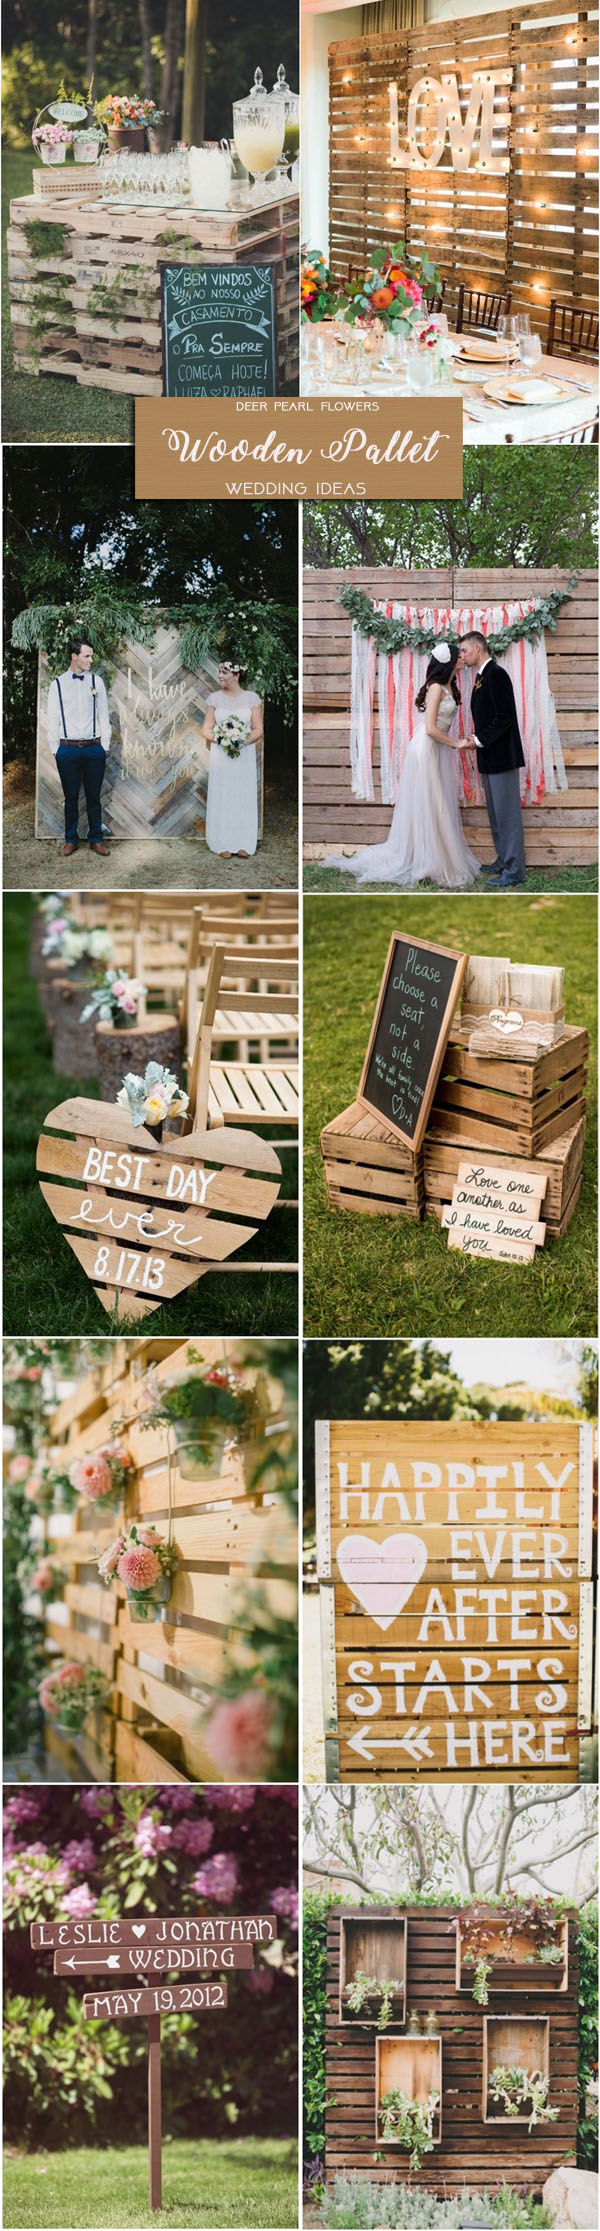 rustic country wedding ideas - wood pallets wedding decor ideas